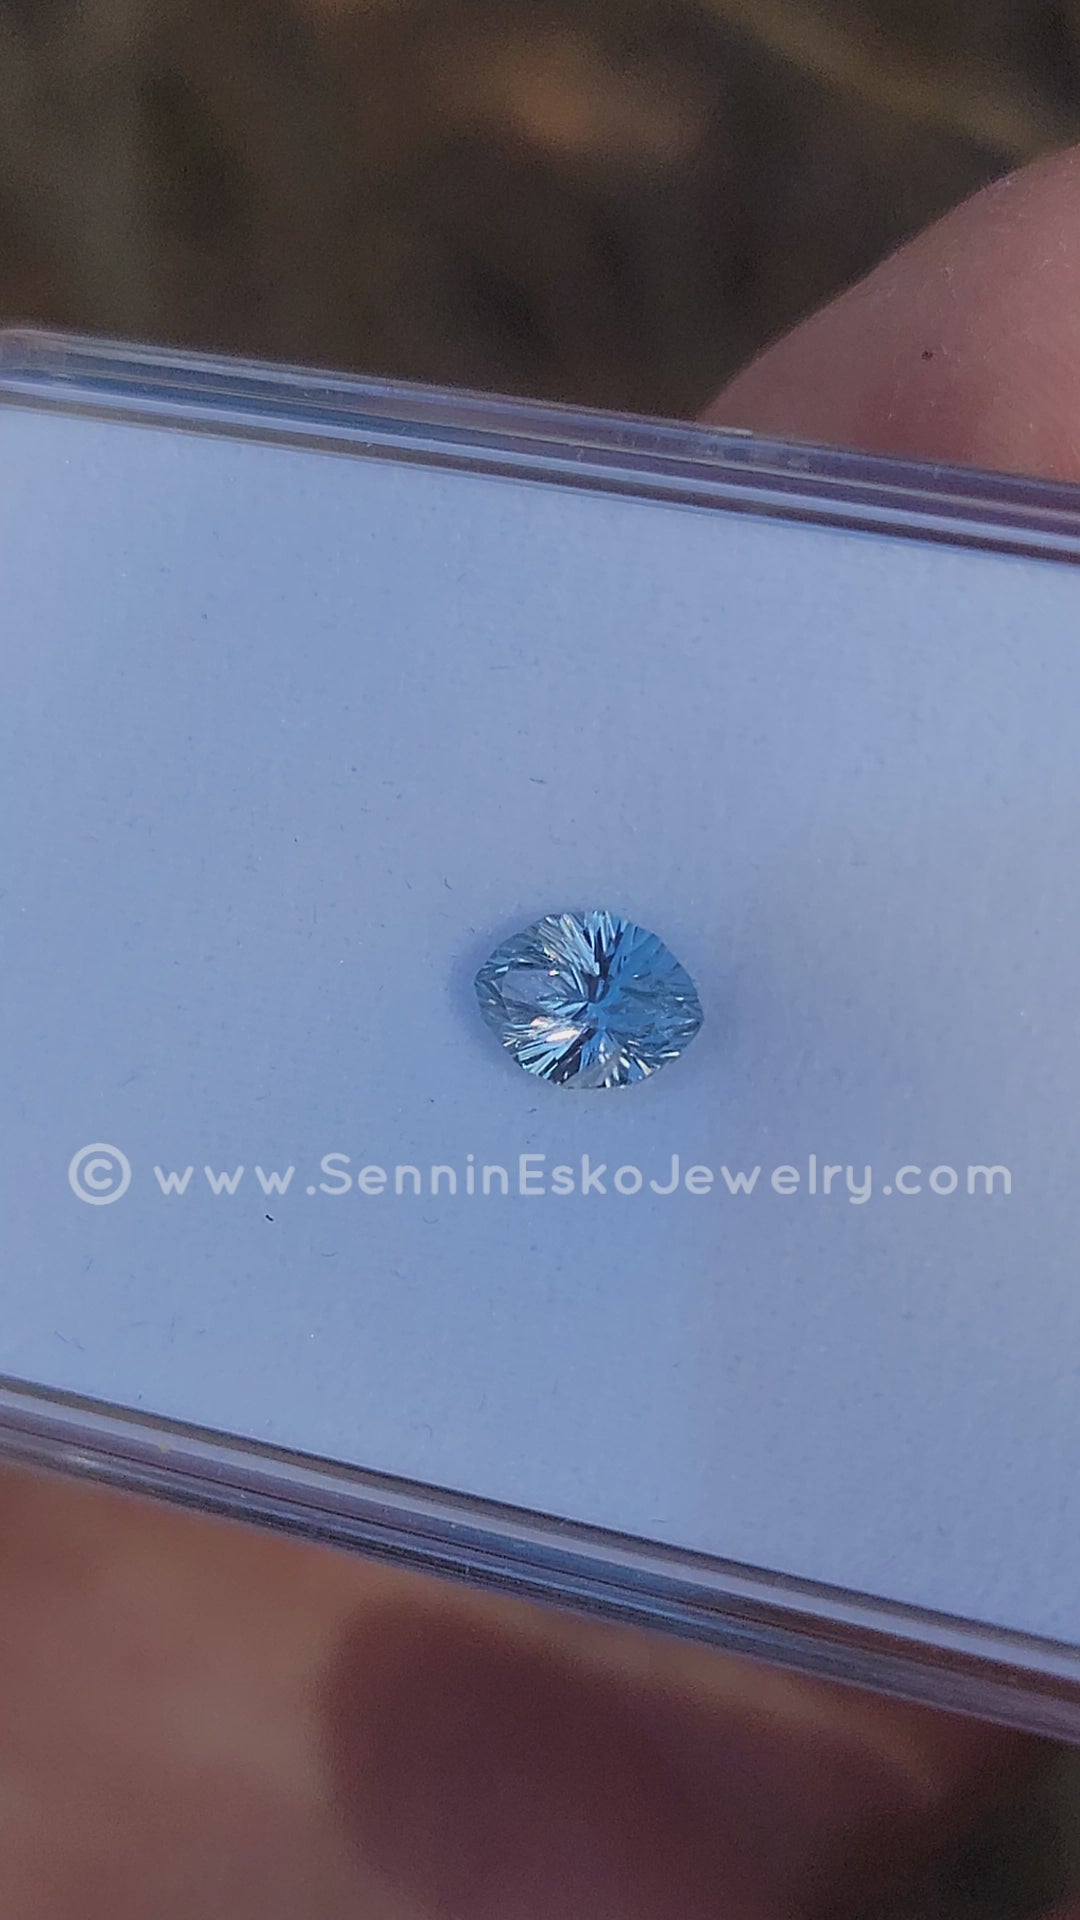 1.4 Carat Light Blue Sapphire Navette - Linear Galaxy Cut - 7.6x5.7mm